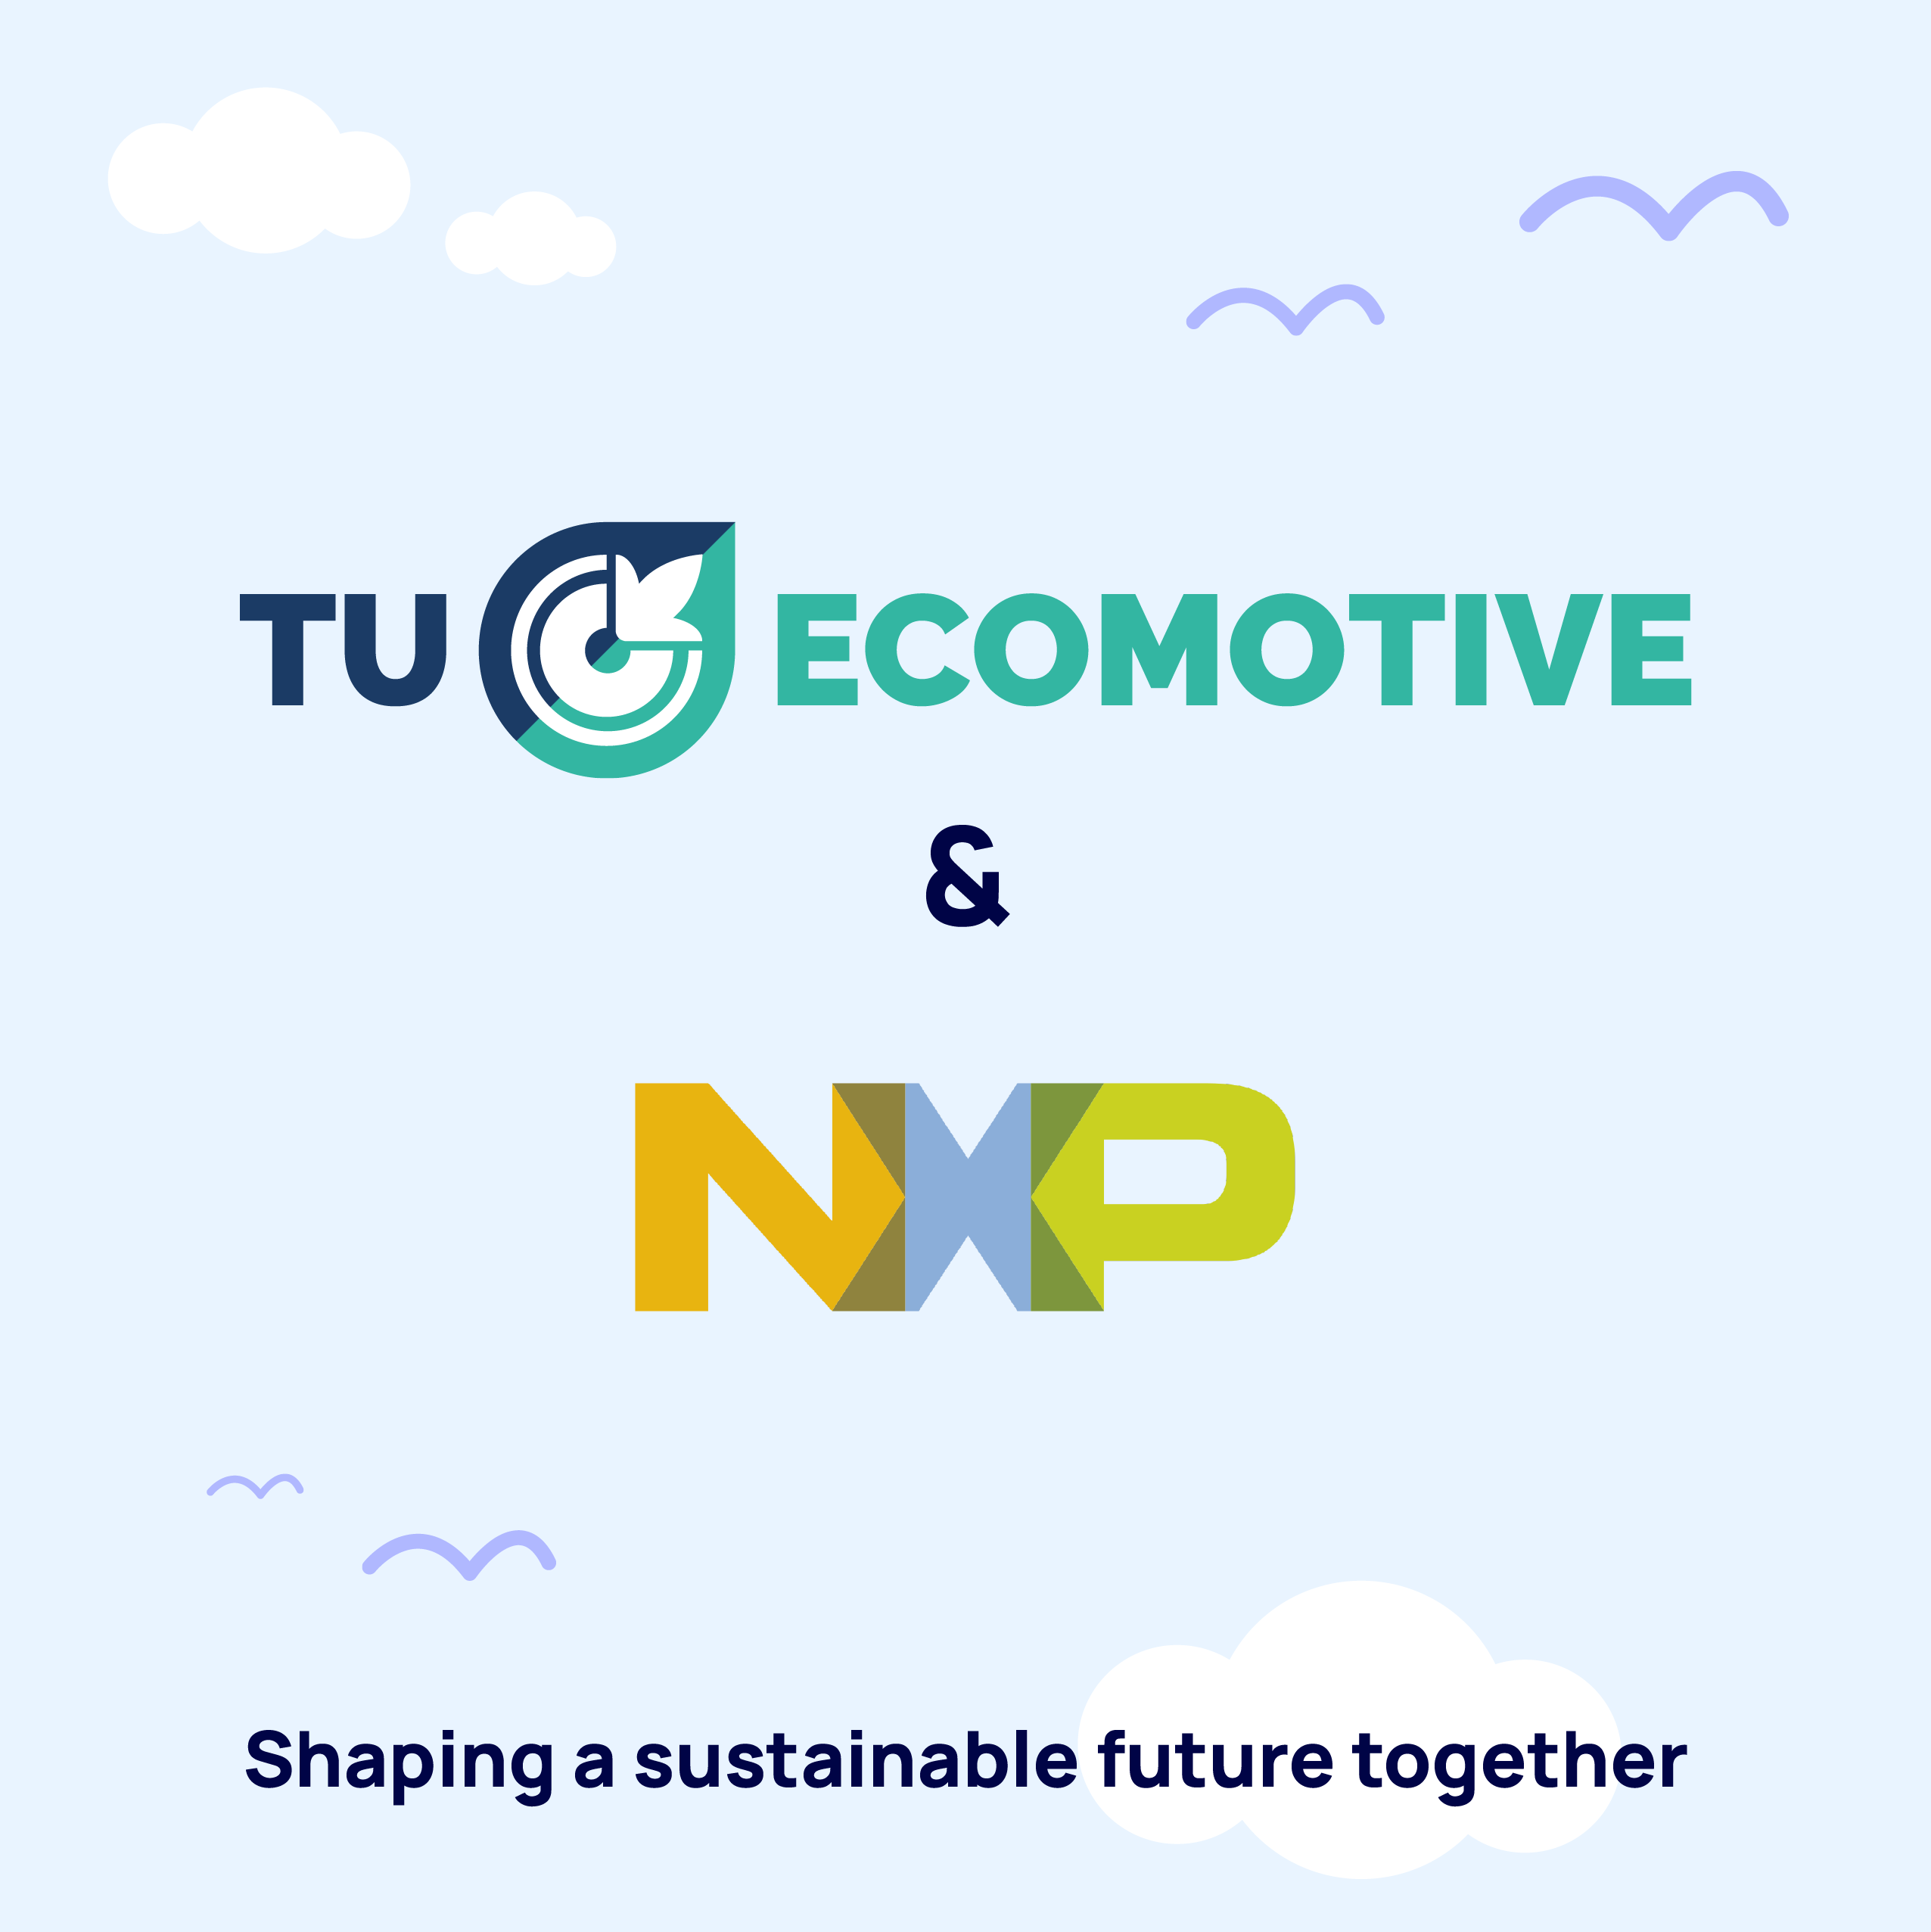 TU/ecomotive & NXP